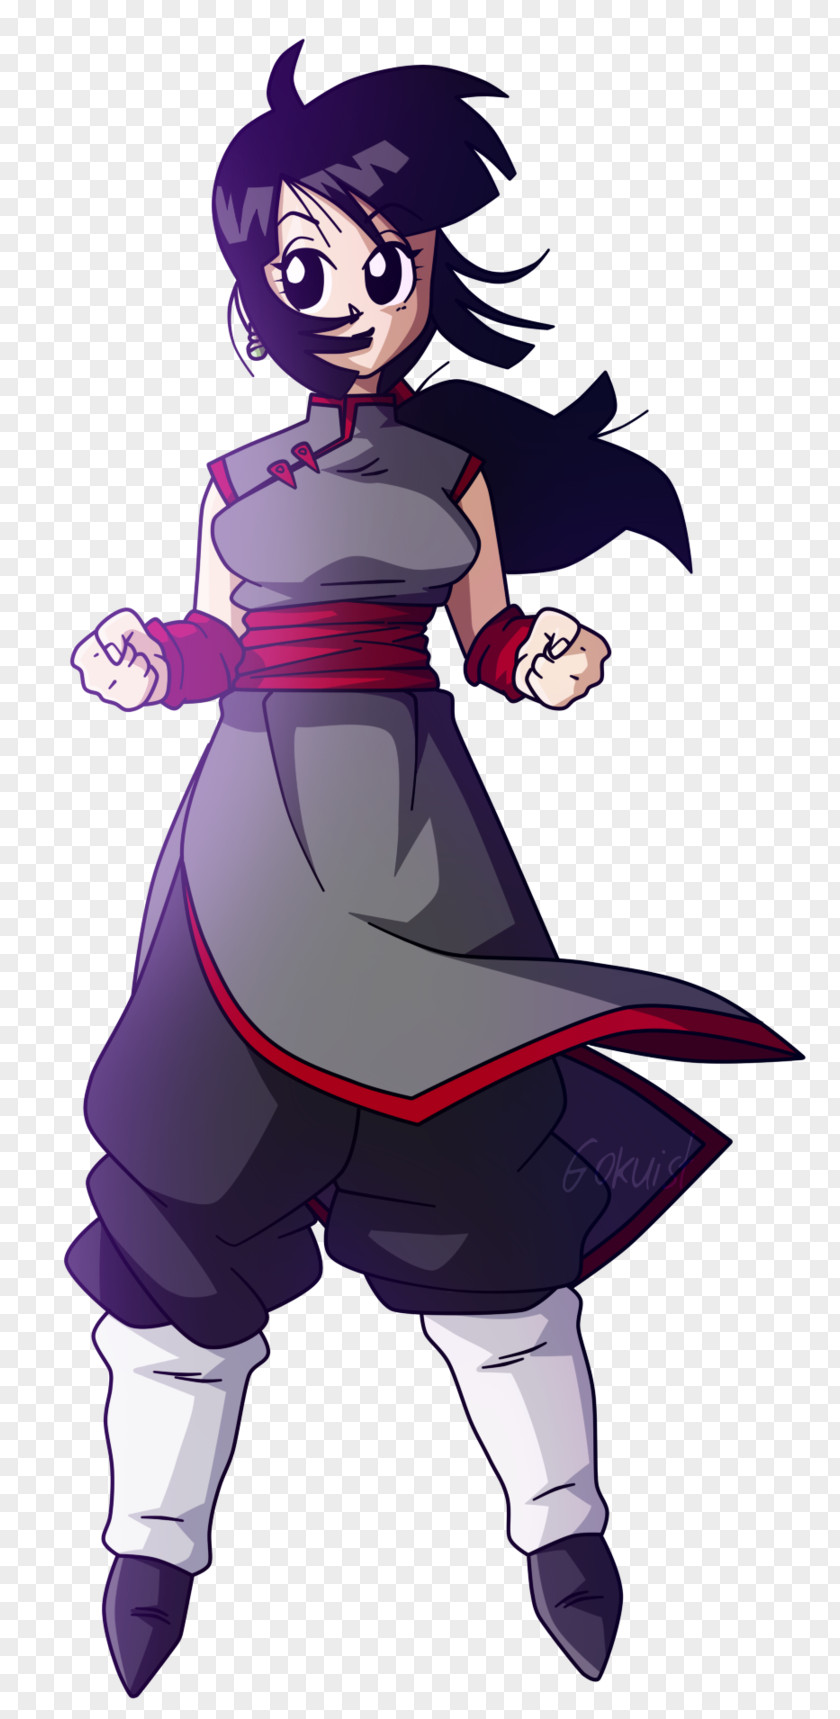 Goku Chi-Chi Black Gohan Goten PNG